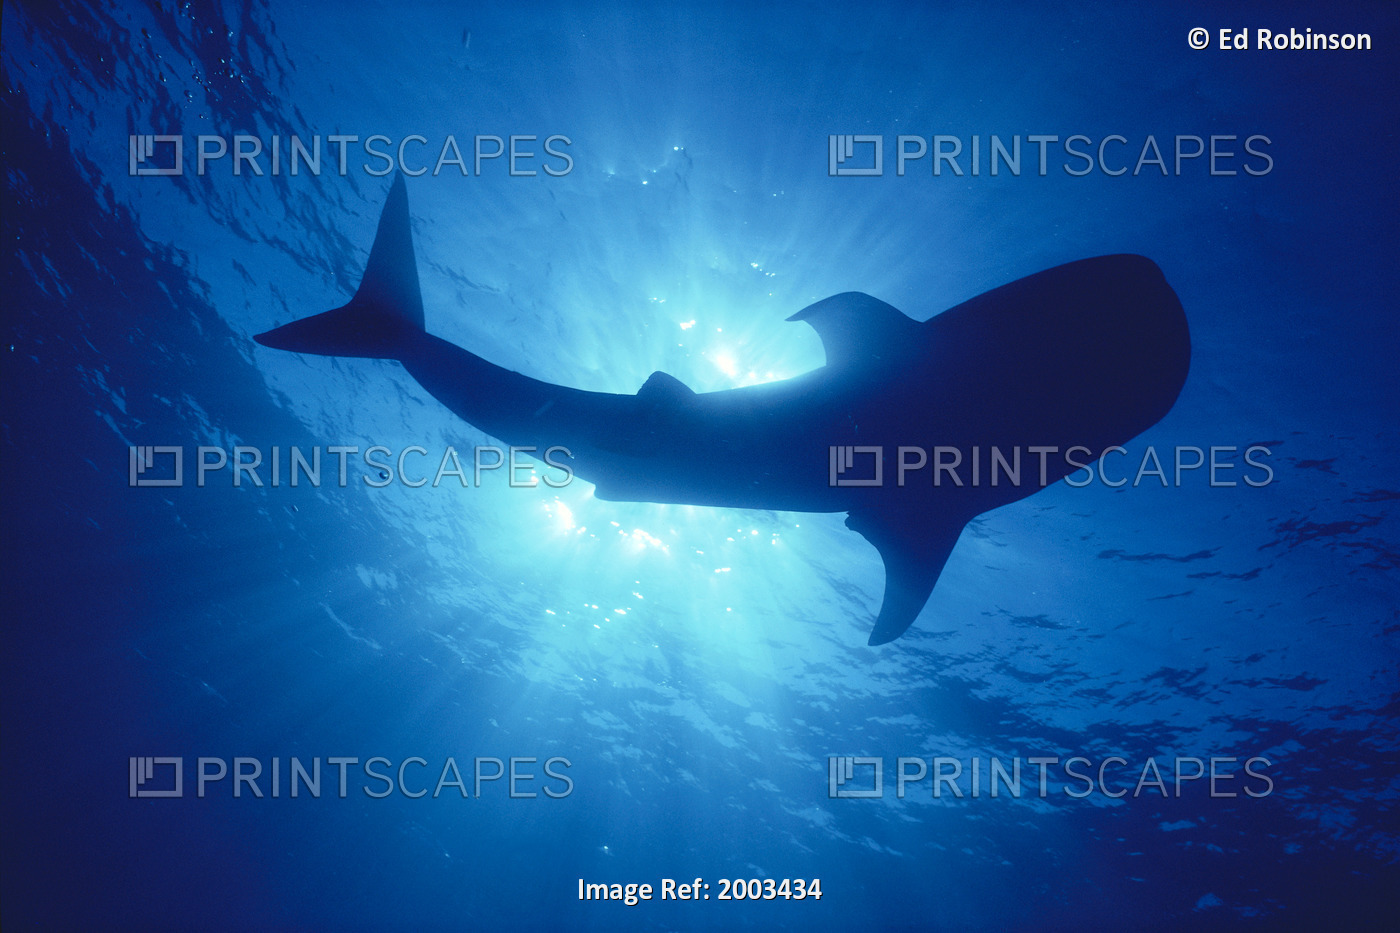 Hawaii, Whale Shark Backlit By Sunburst (Rhincodon Typus) Silhouette